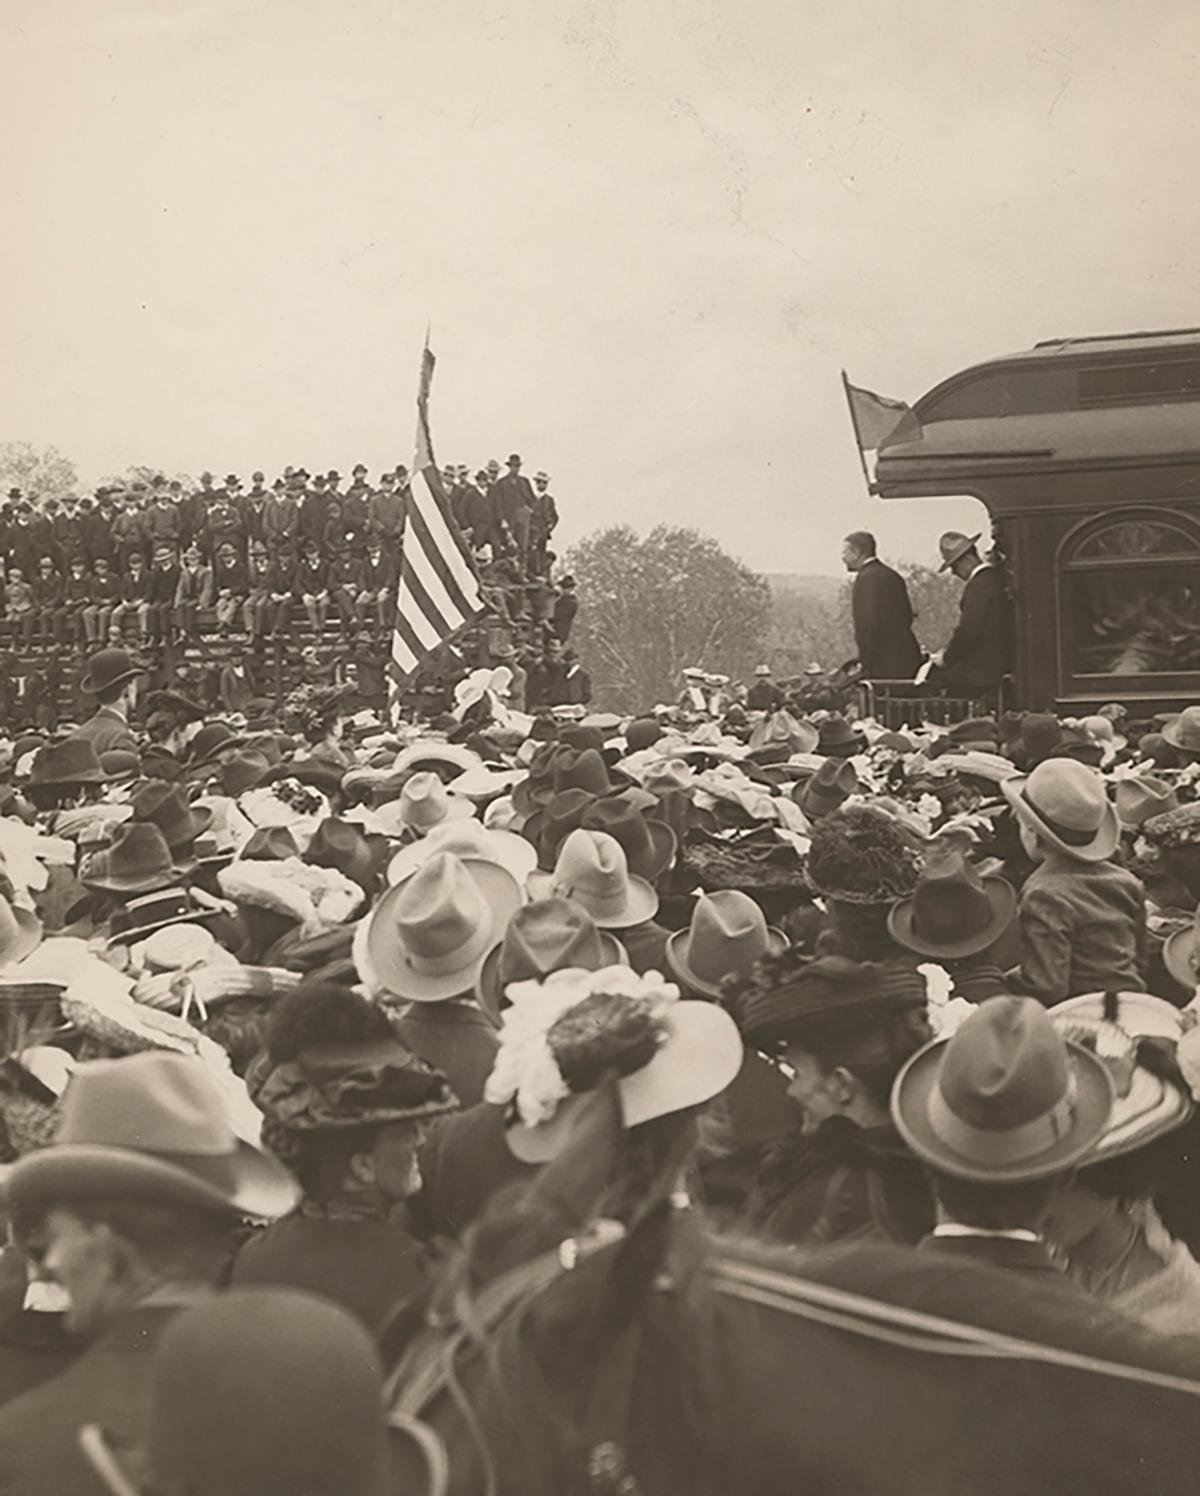 Teddy Roosevelt at Kansas City, Kansas, 1900. SMU Libraries Digital Collections. (Public Domain)